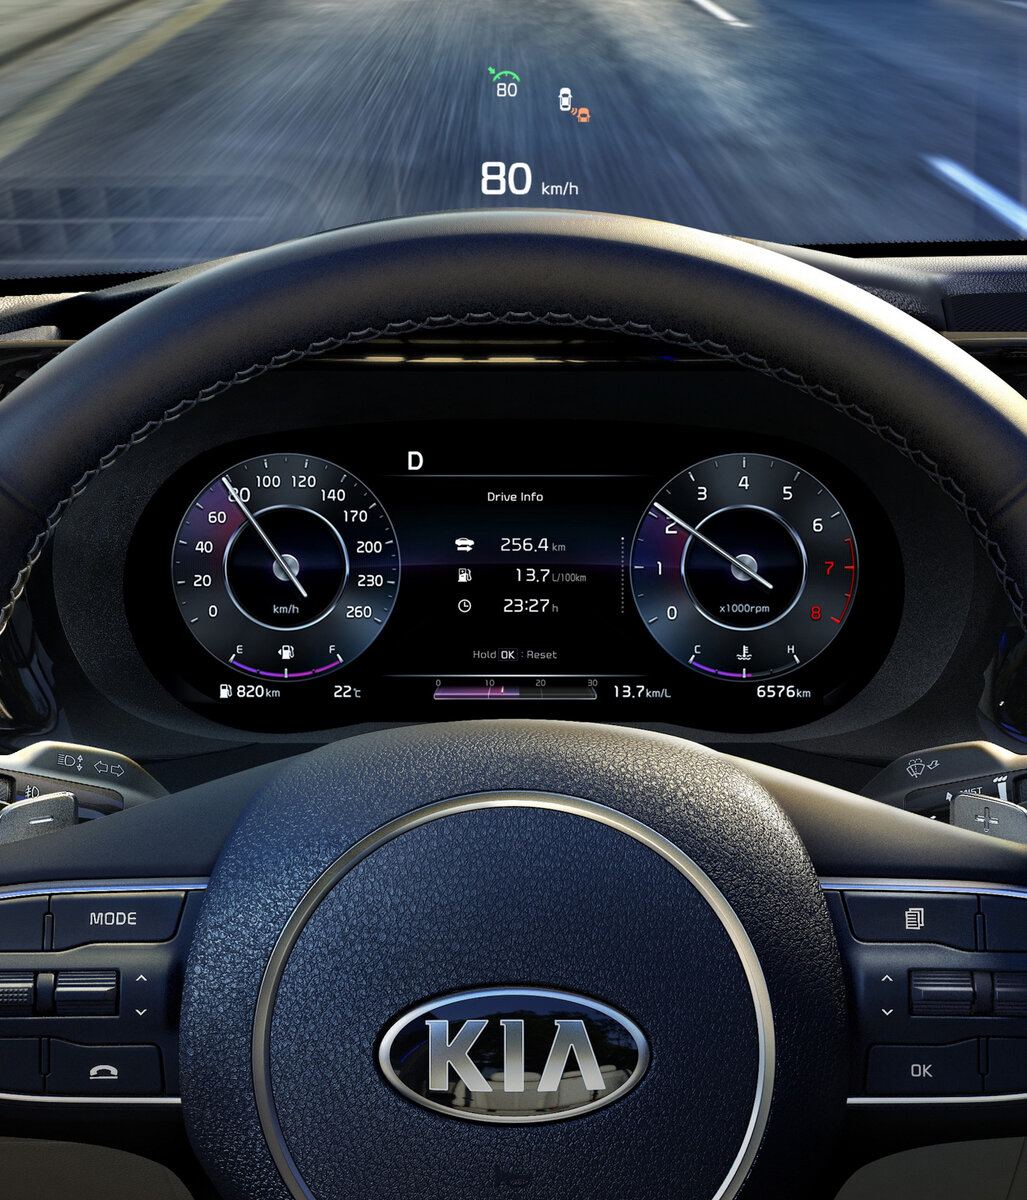 Kia выпустила конкурента Toyota Camry и VW Passat. Рассказываю о новом и дерзком седане Kia K5 ???